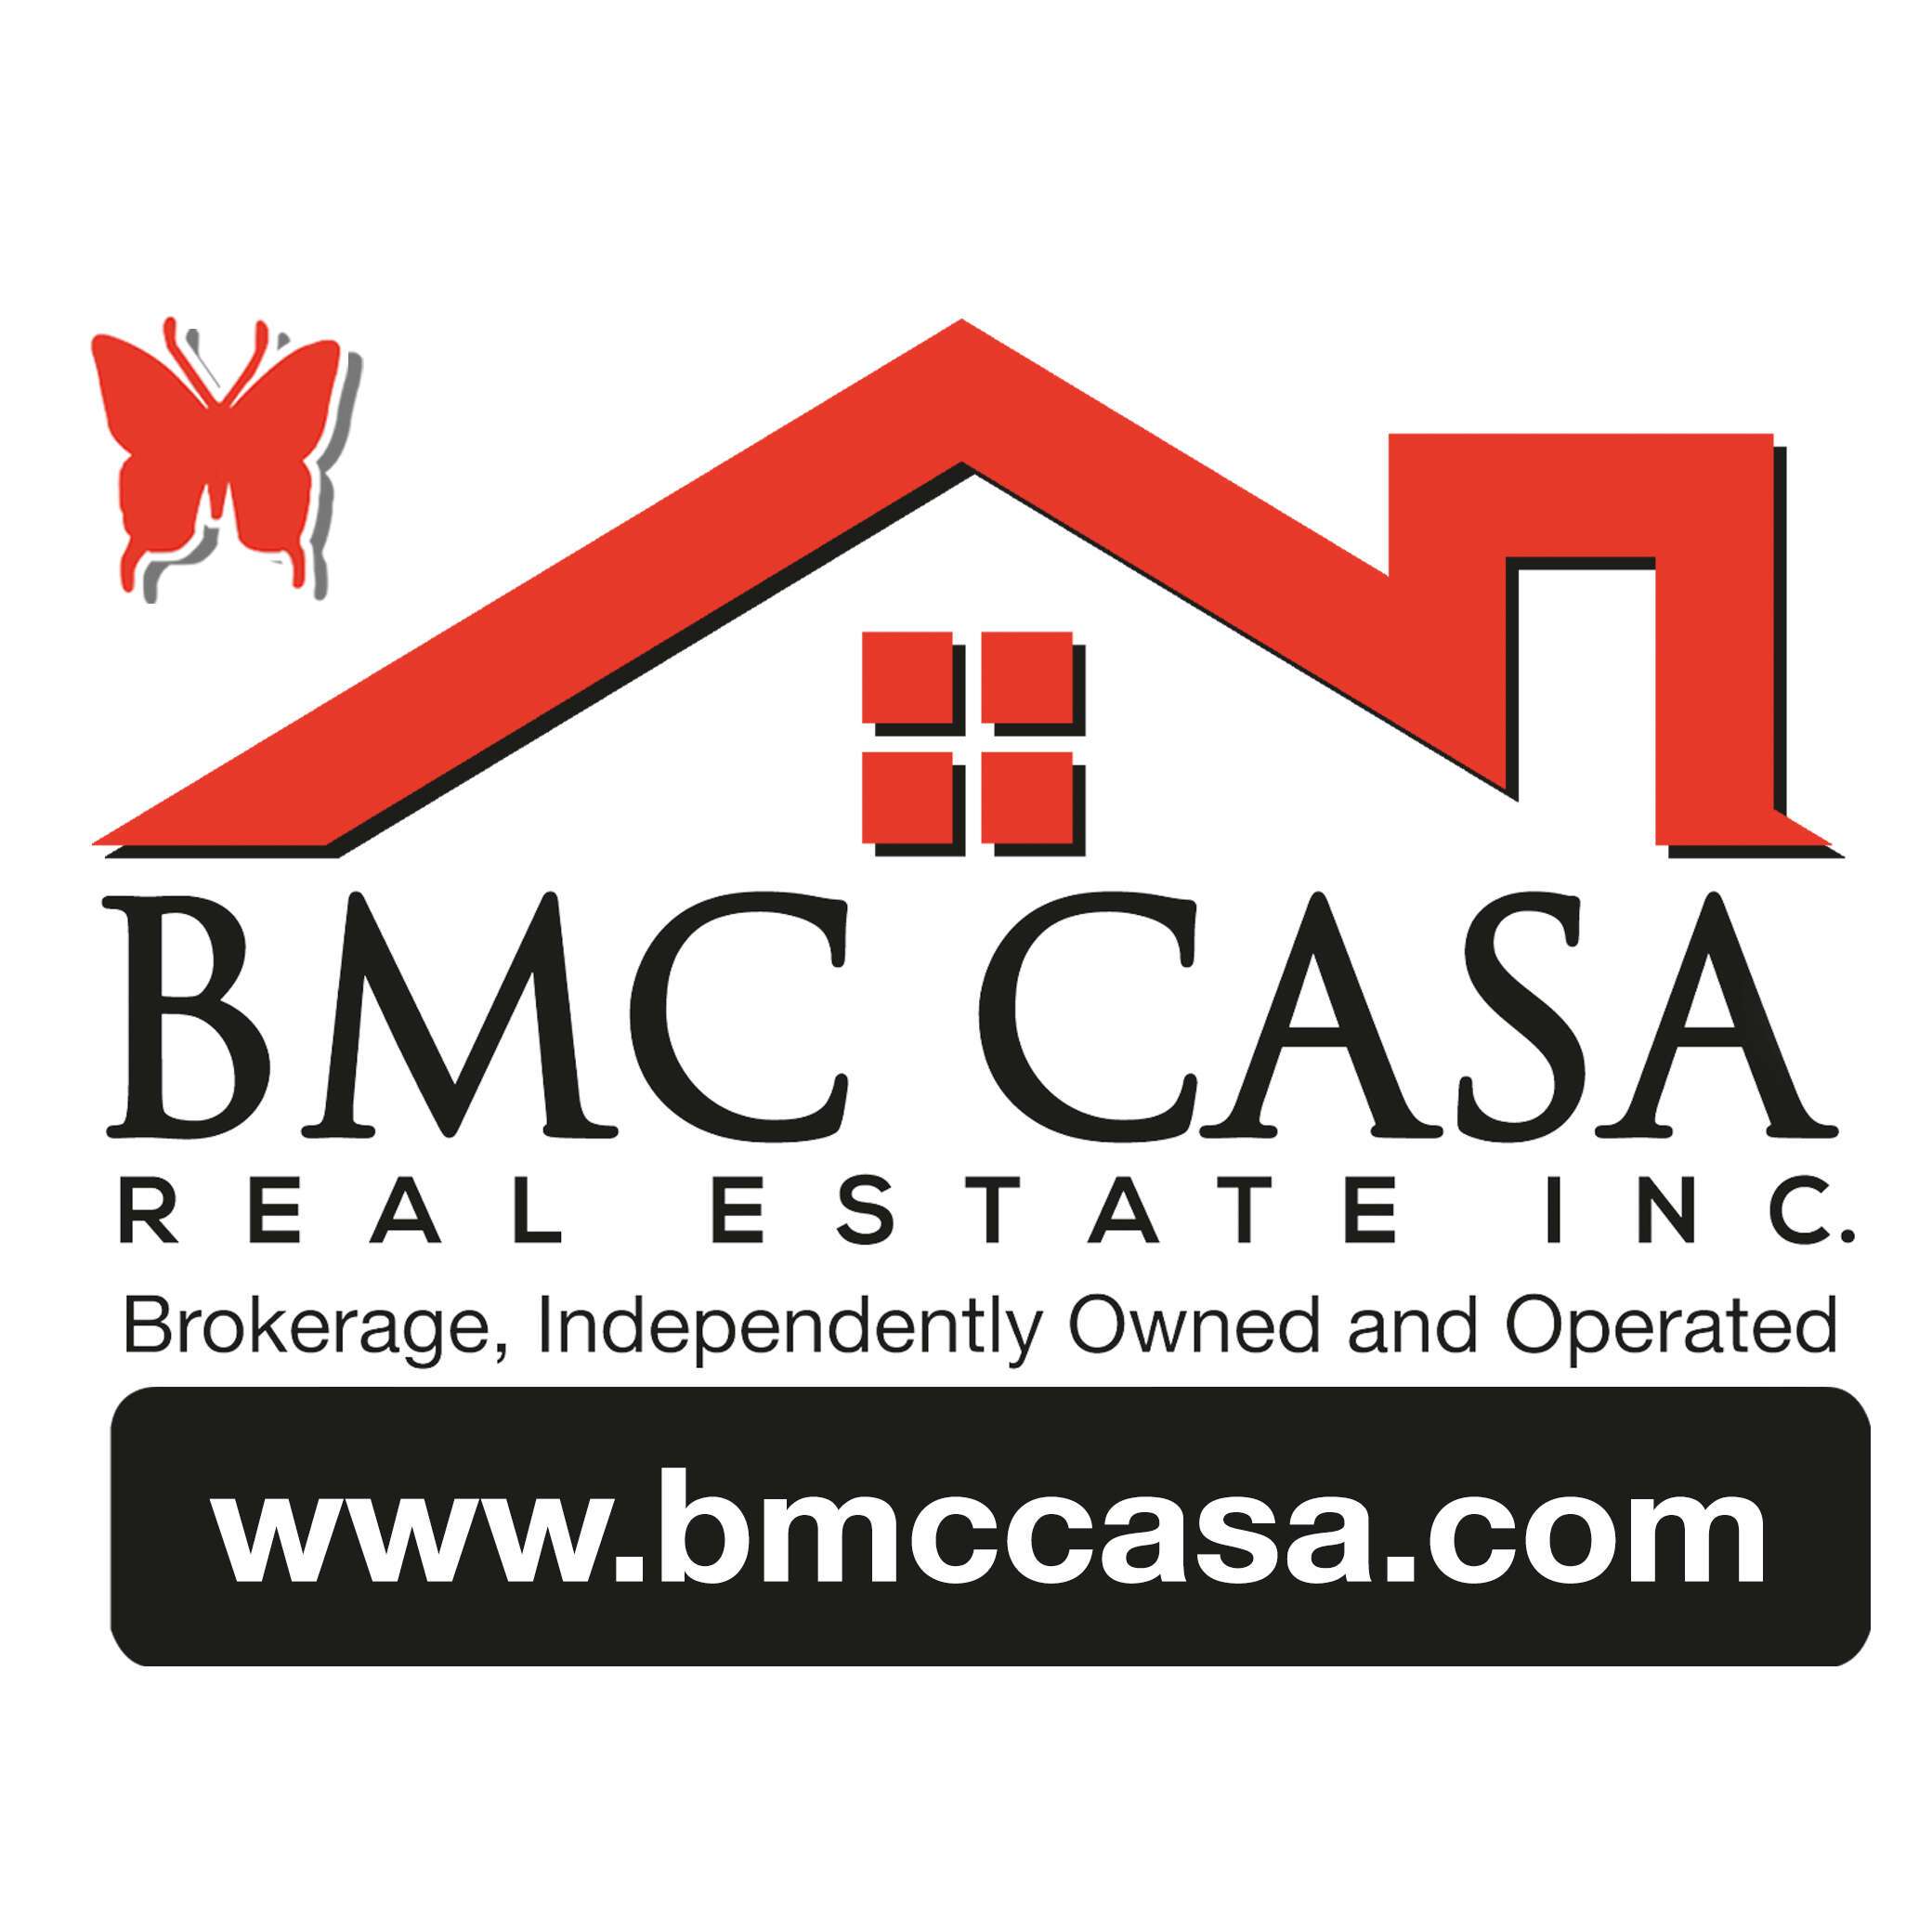 BMC Casa Real Estate Inc.